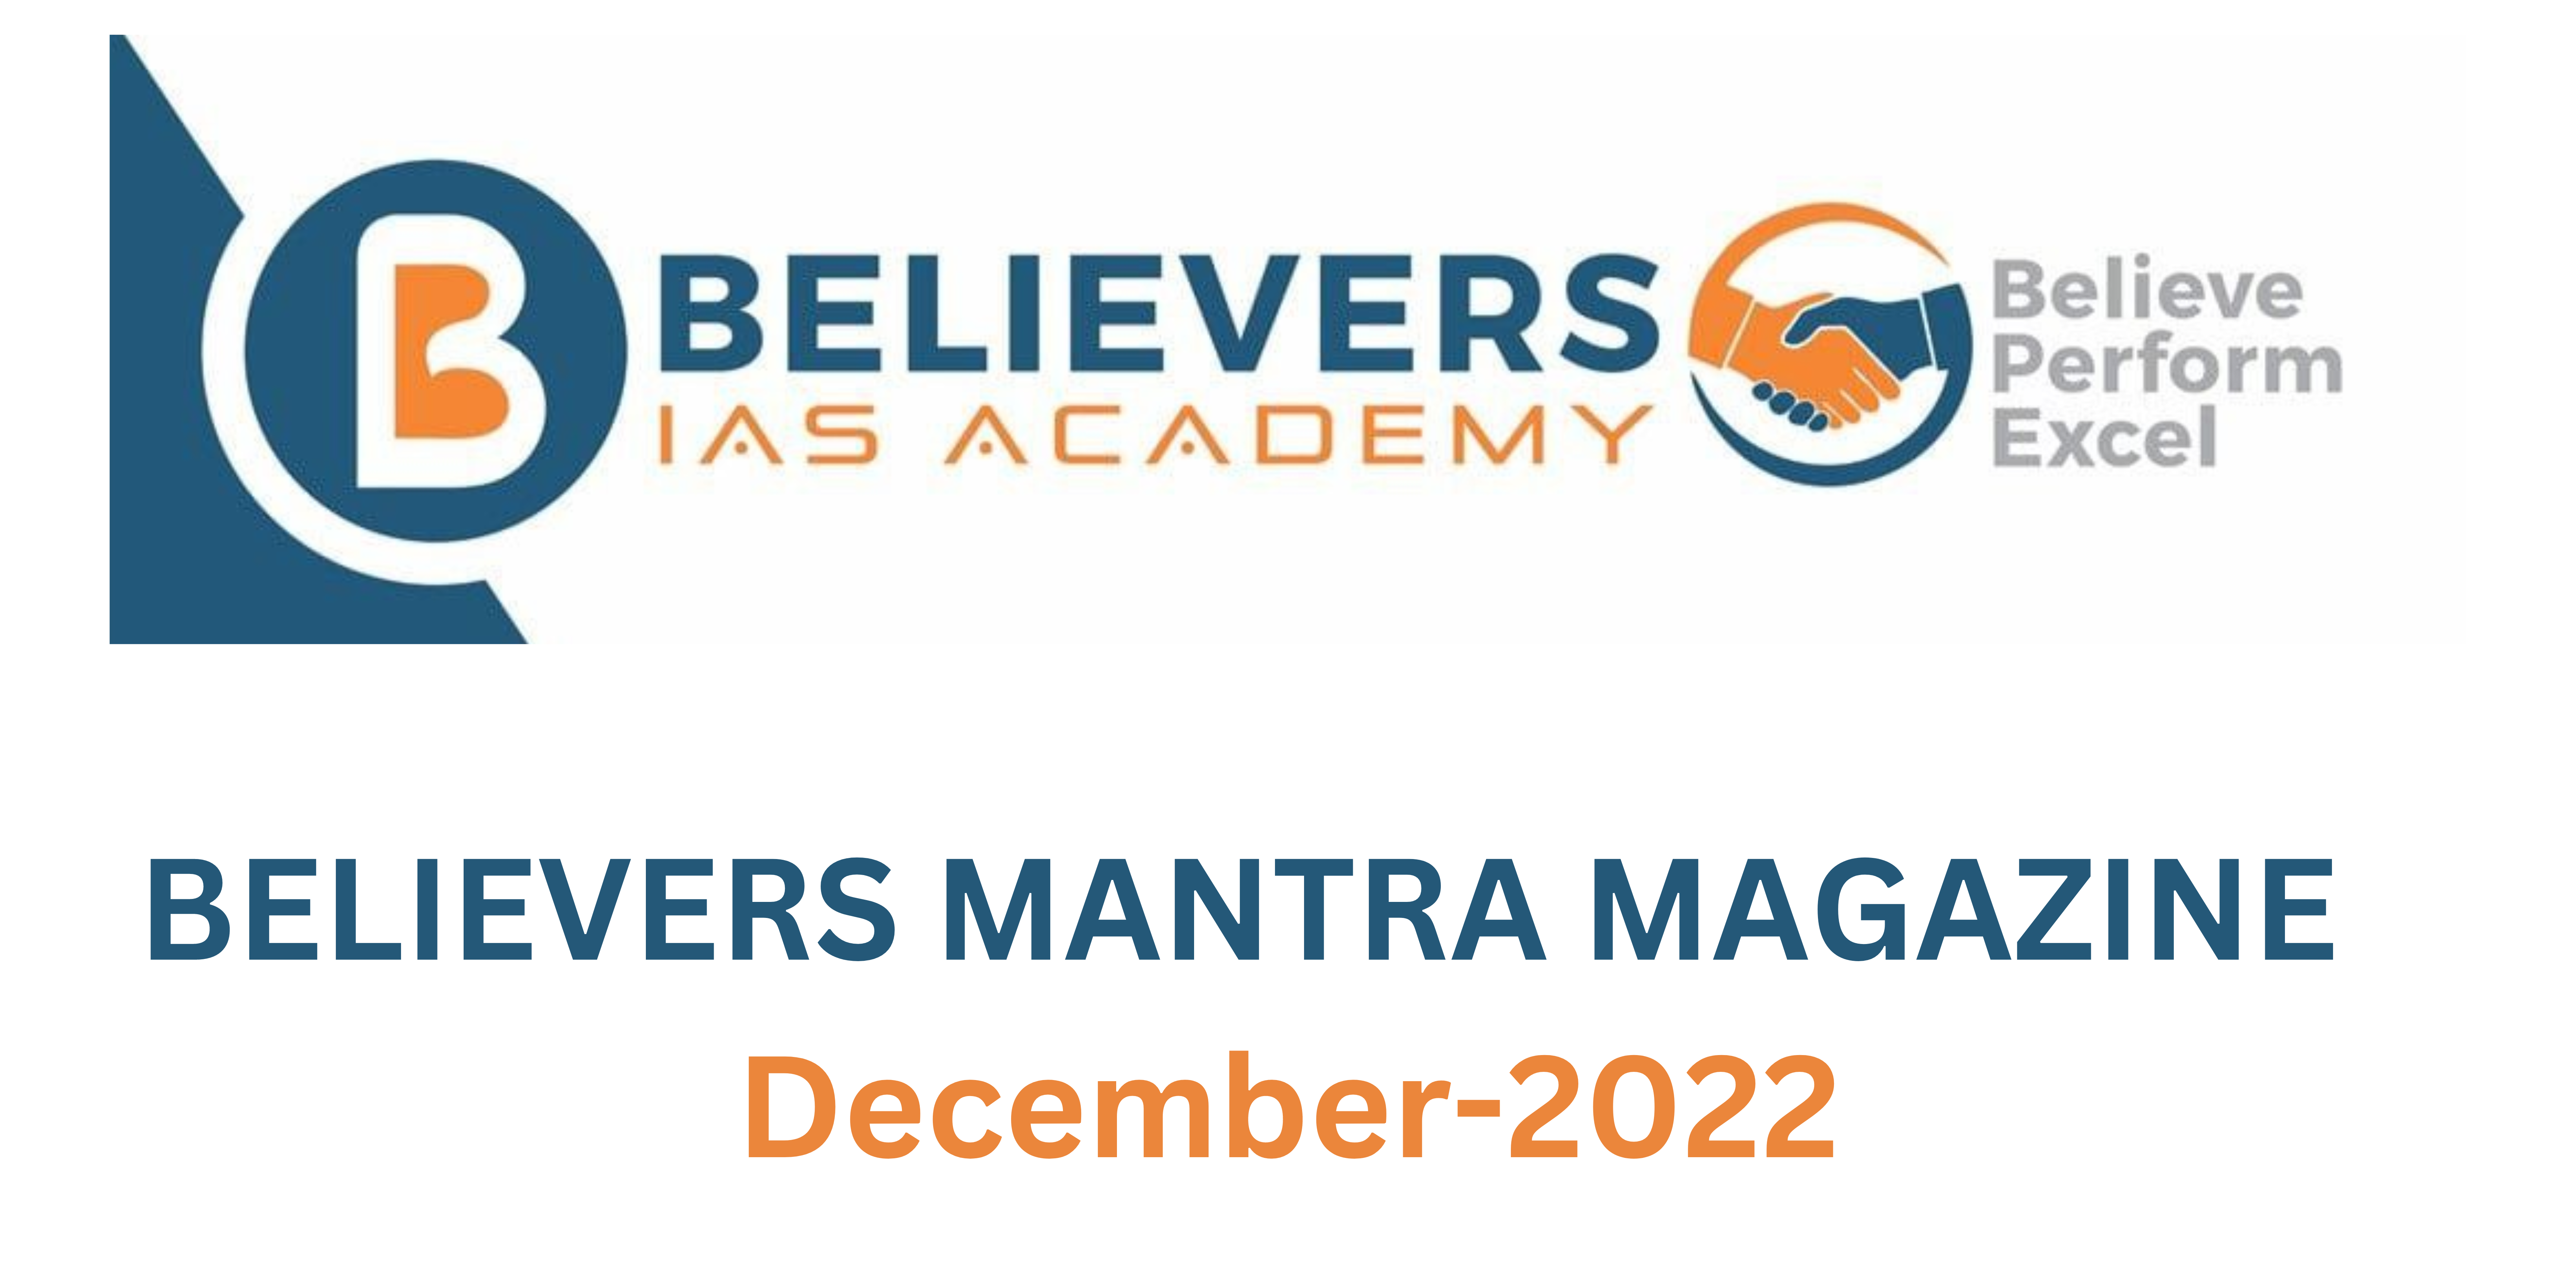 Believers Mantra Magazine - December, 2022